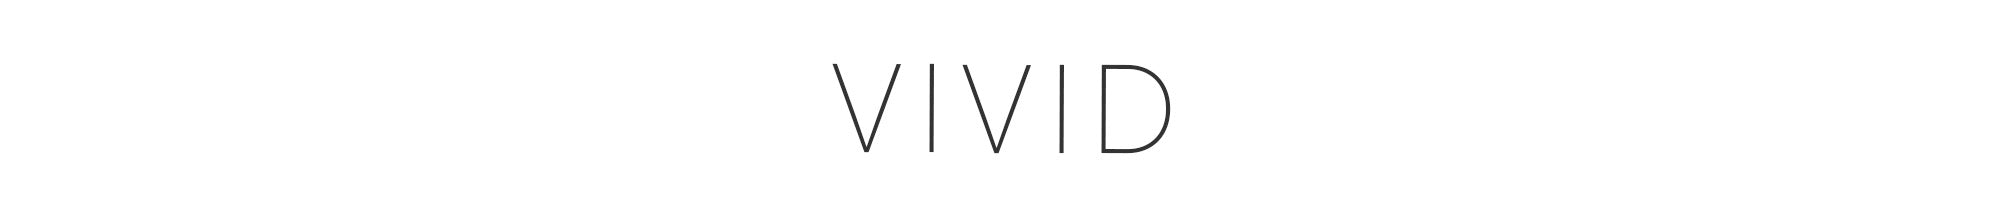 VIVID - Auguste The Label